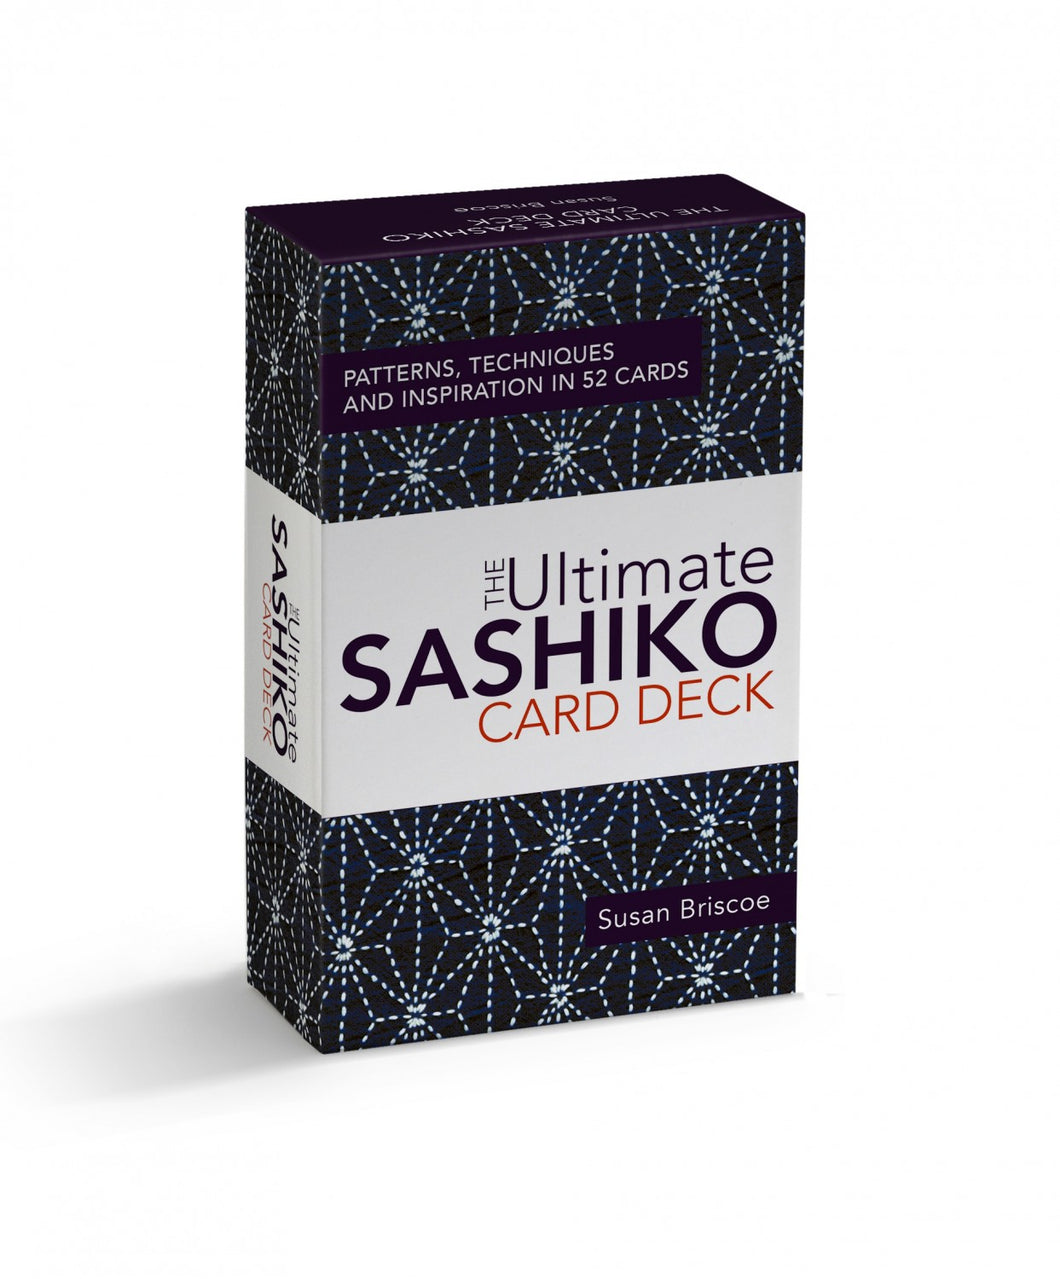 Ultimate Sashiko card deck crests, borders, classic motifs